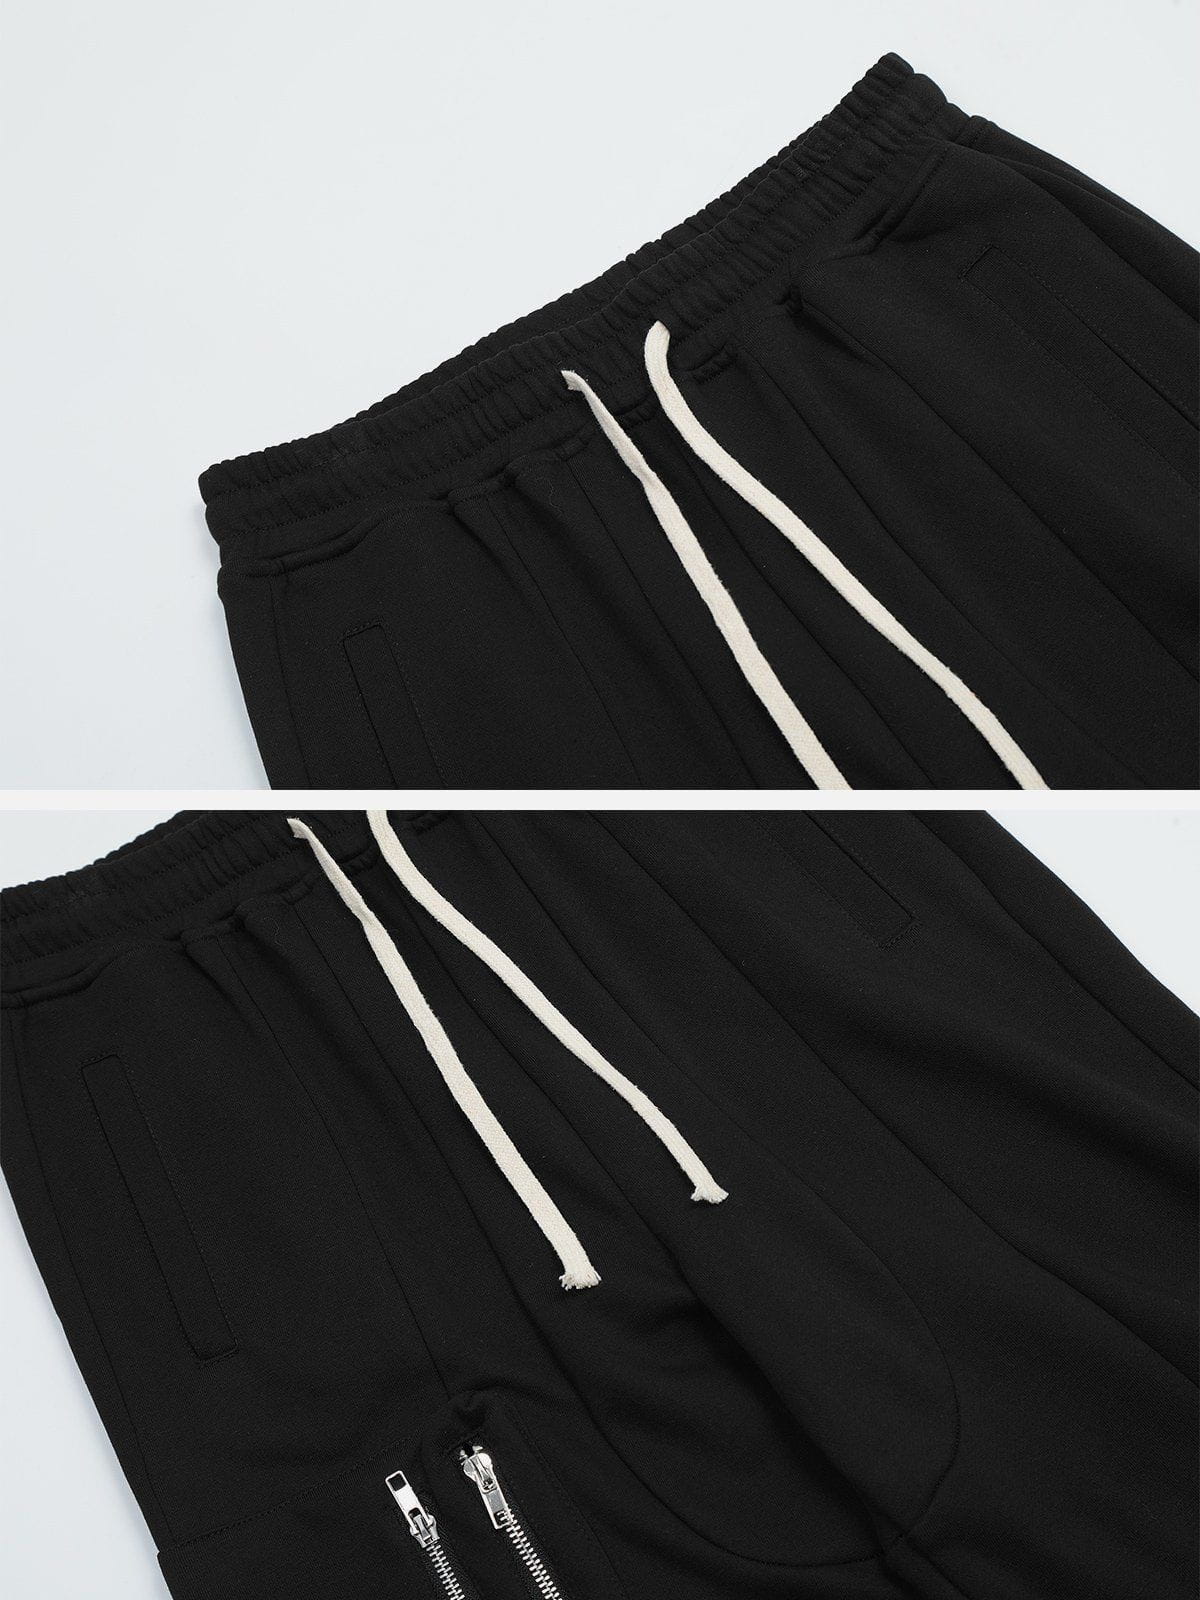 Majesda® - Drawstring Multi-Pocket Cargo Pants outfit ideas streetwear fashion